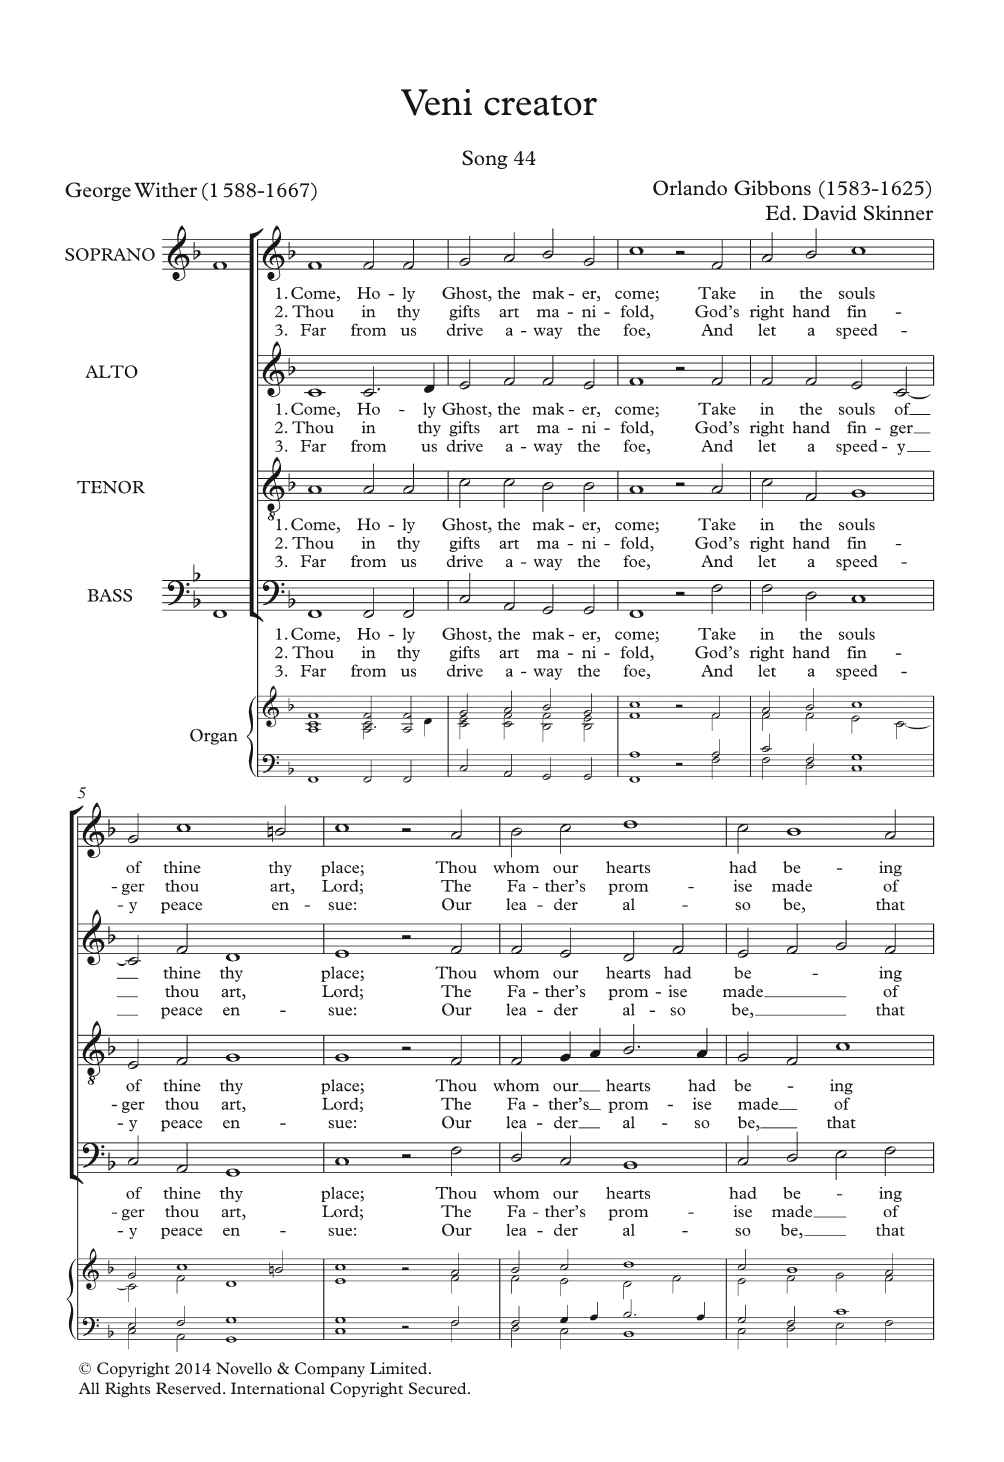 Orlando Gibbons Veni Creator Sheet Music Notes & Chords for SATB - Download or Print PDF